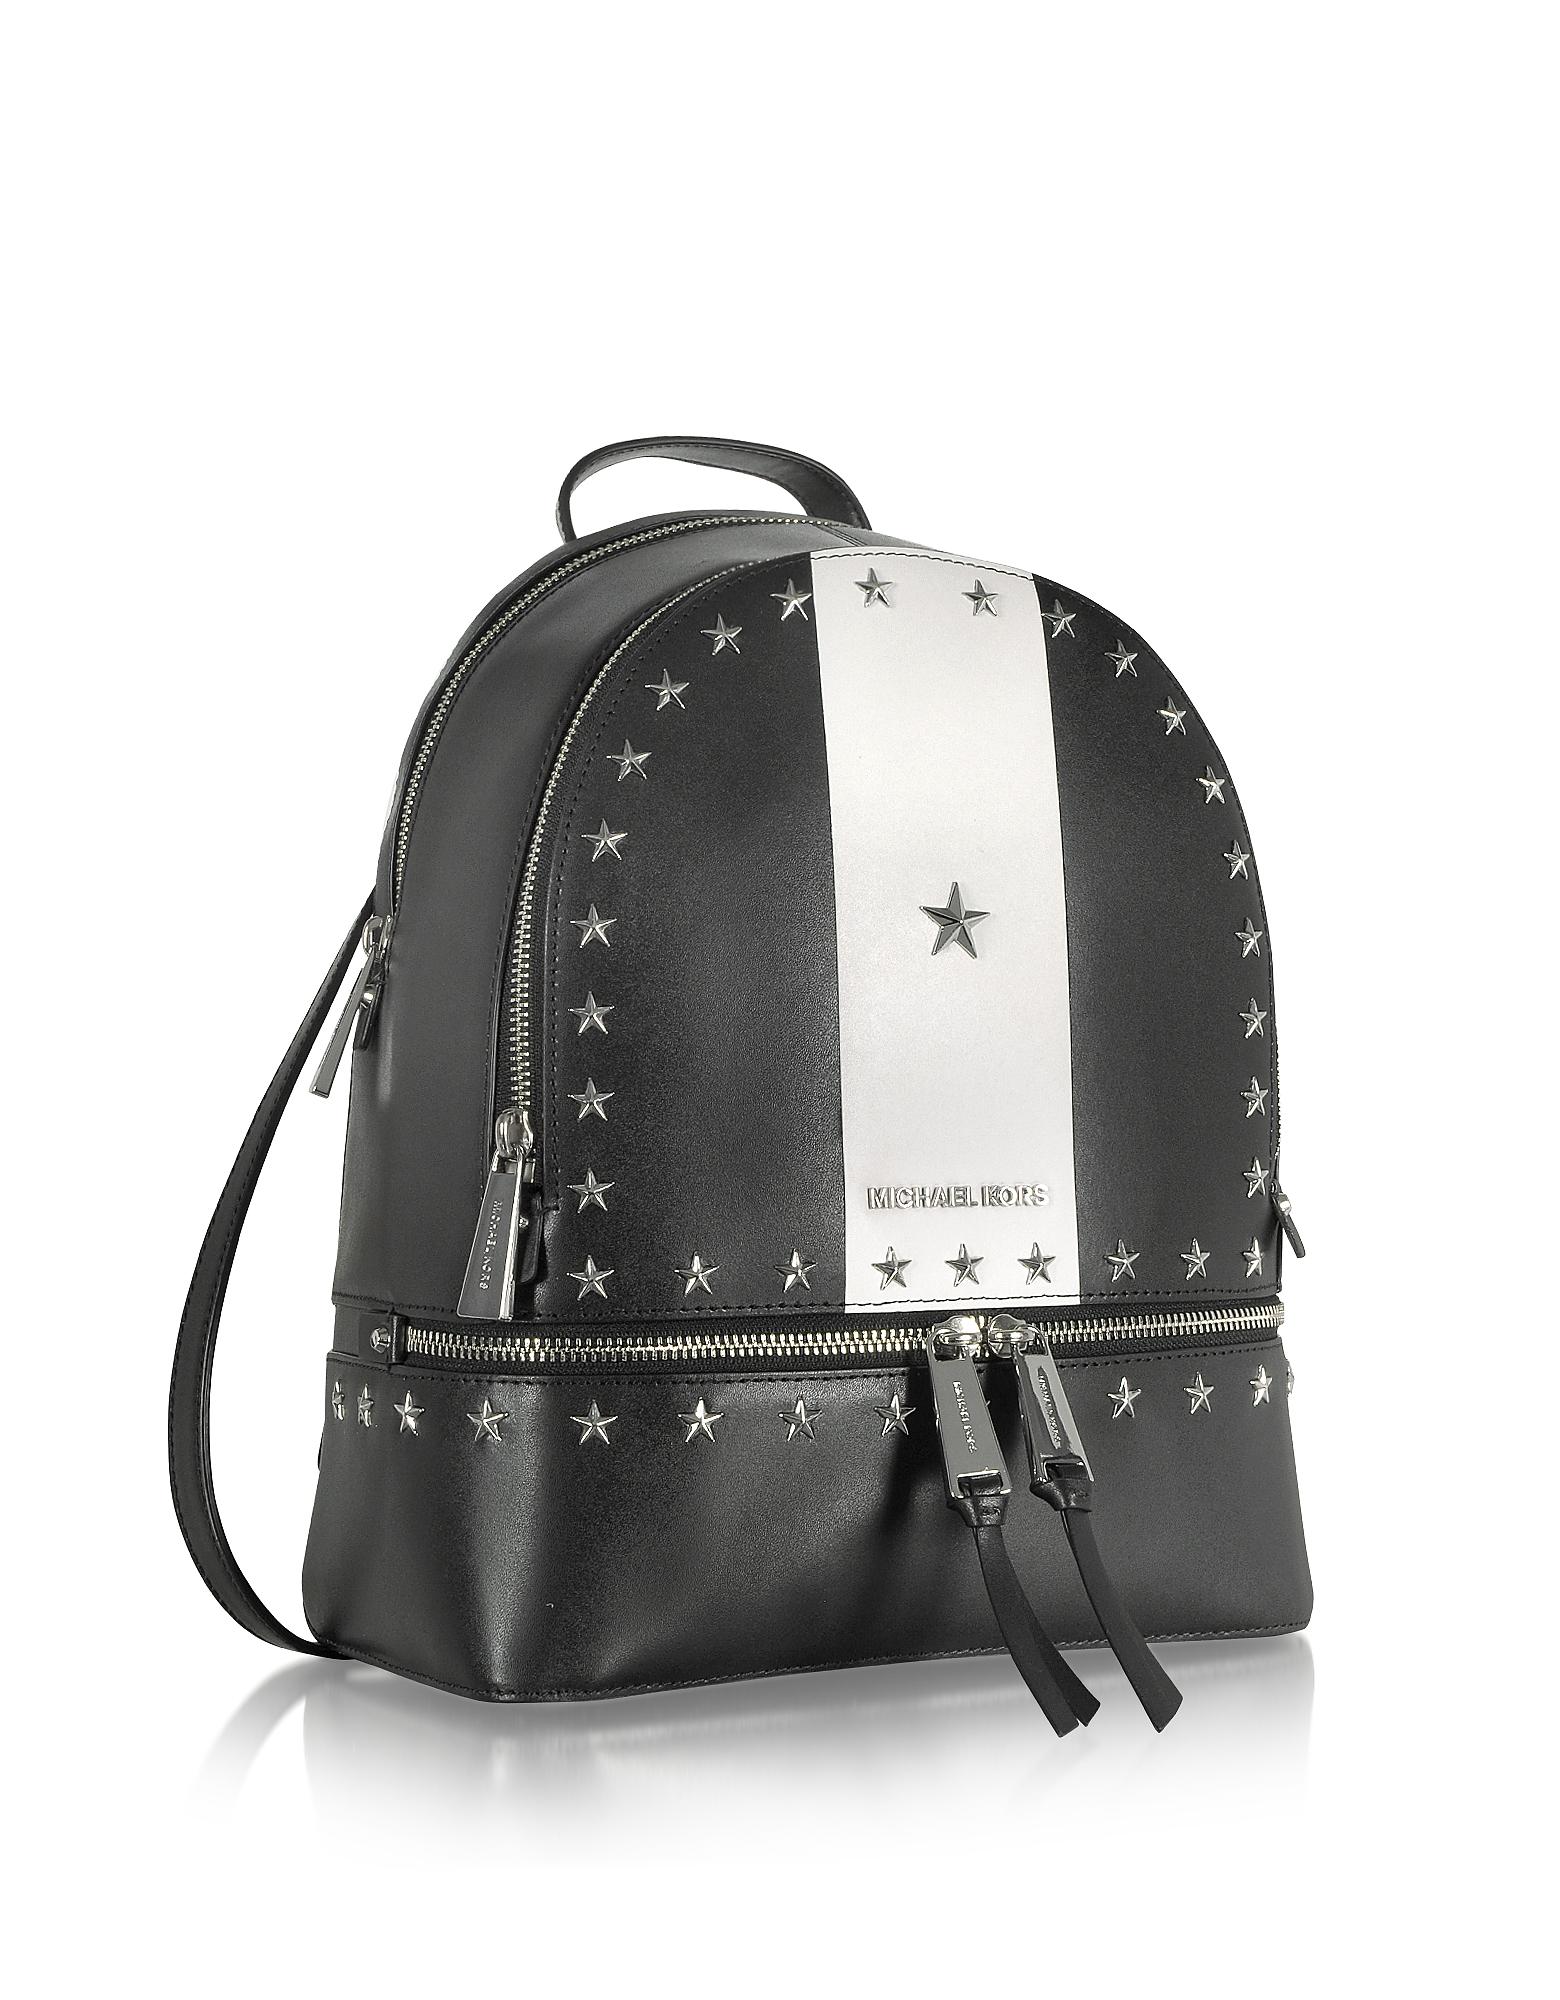 Lyst - Michael Kors Rhea Zip Medium Black And White Leather Backpack W/stars in Black